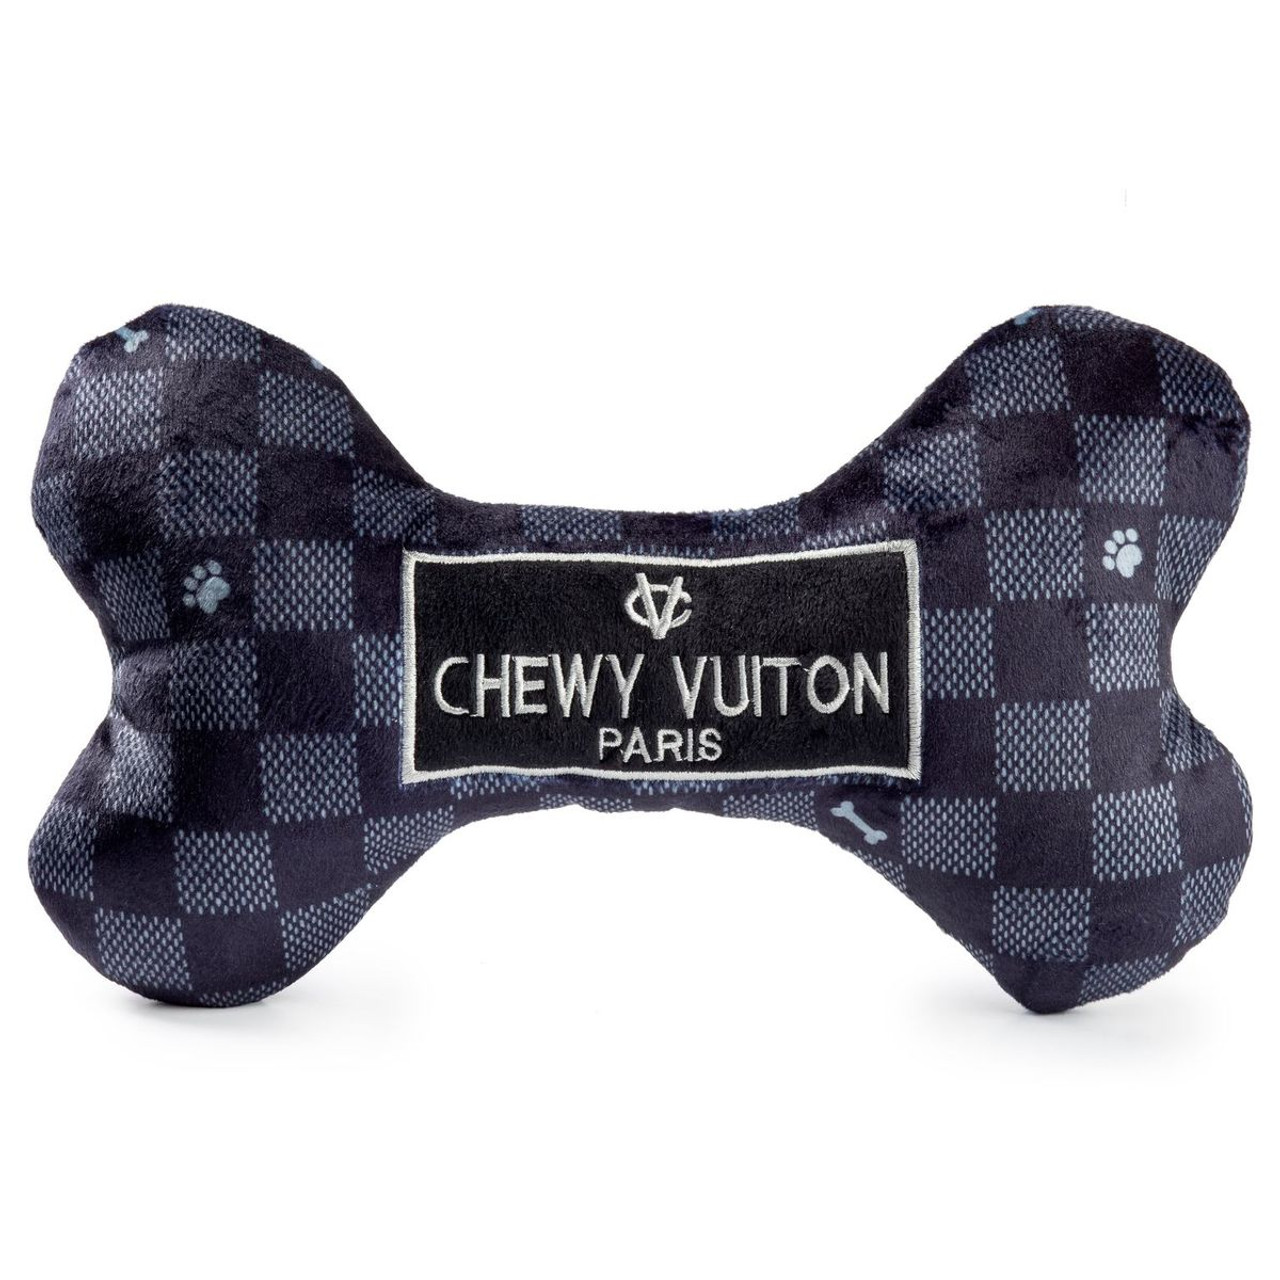 Black Checker Chewy Vuiton Bone